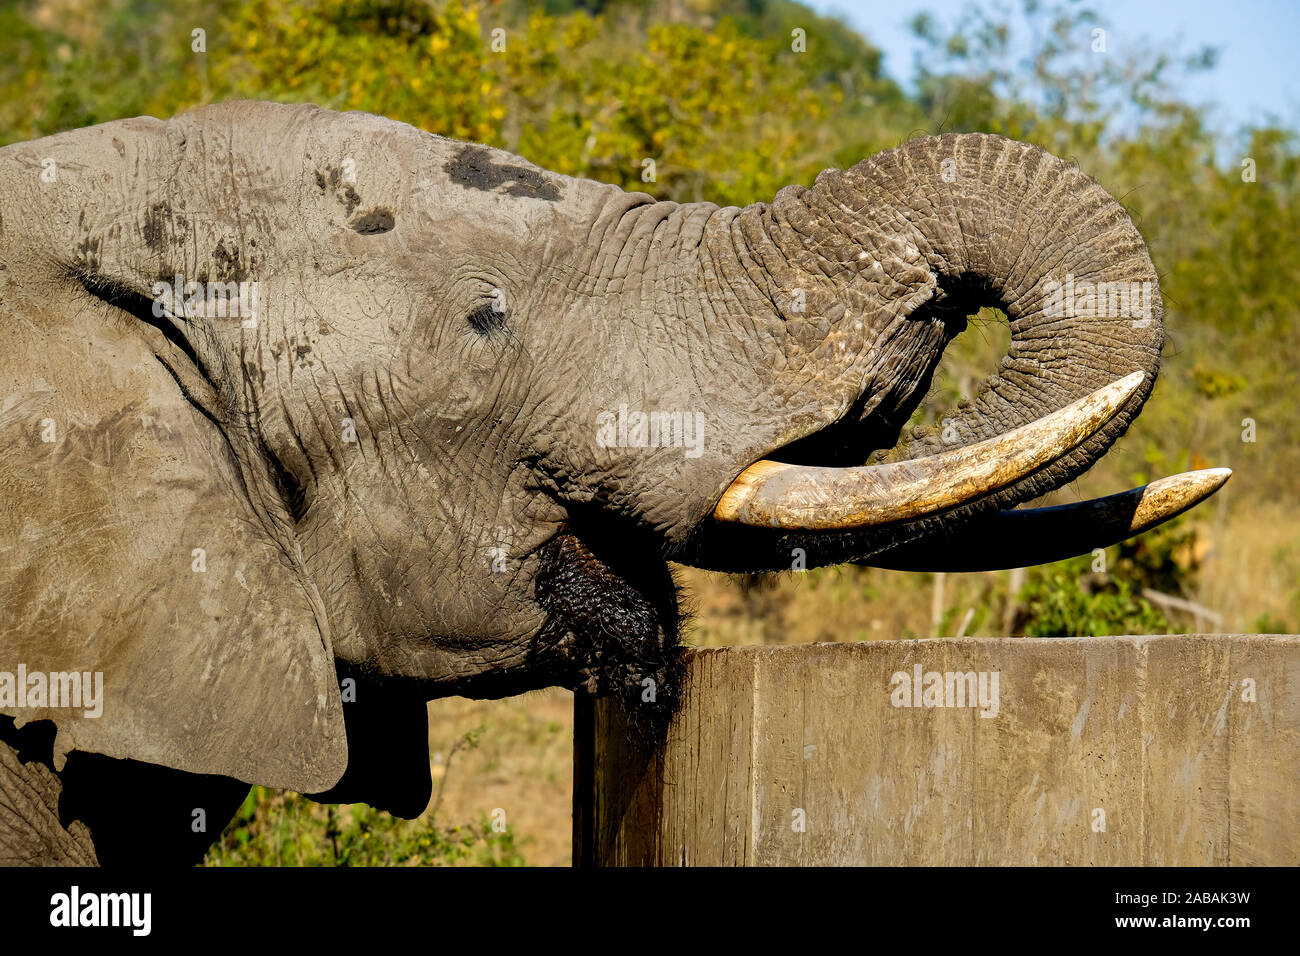 Close-up de un elefante africano macho bull agua potable Foto de stock